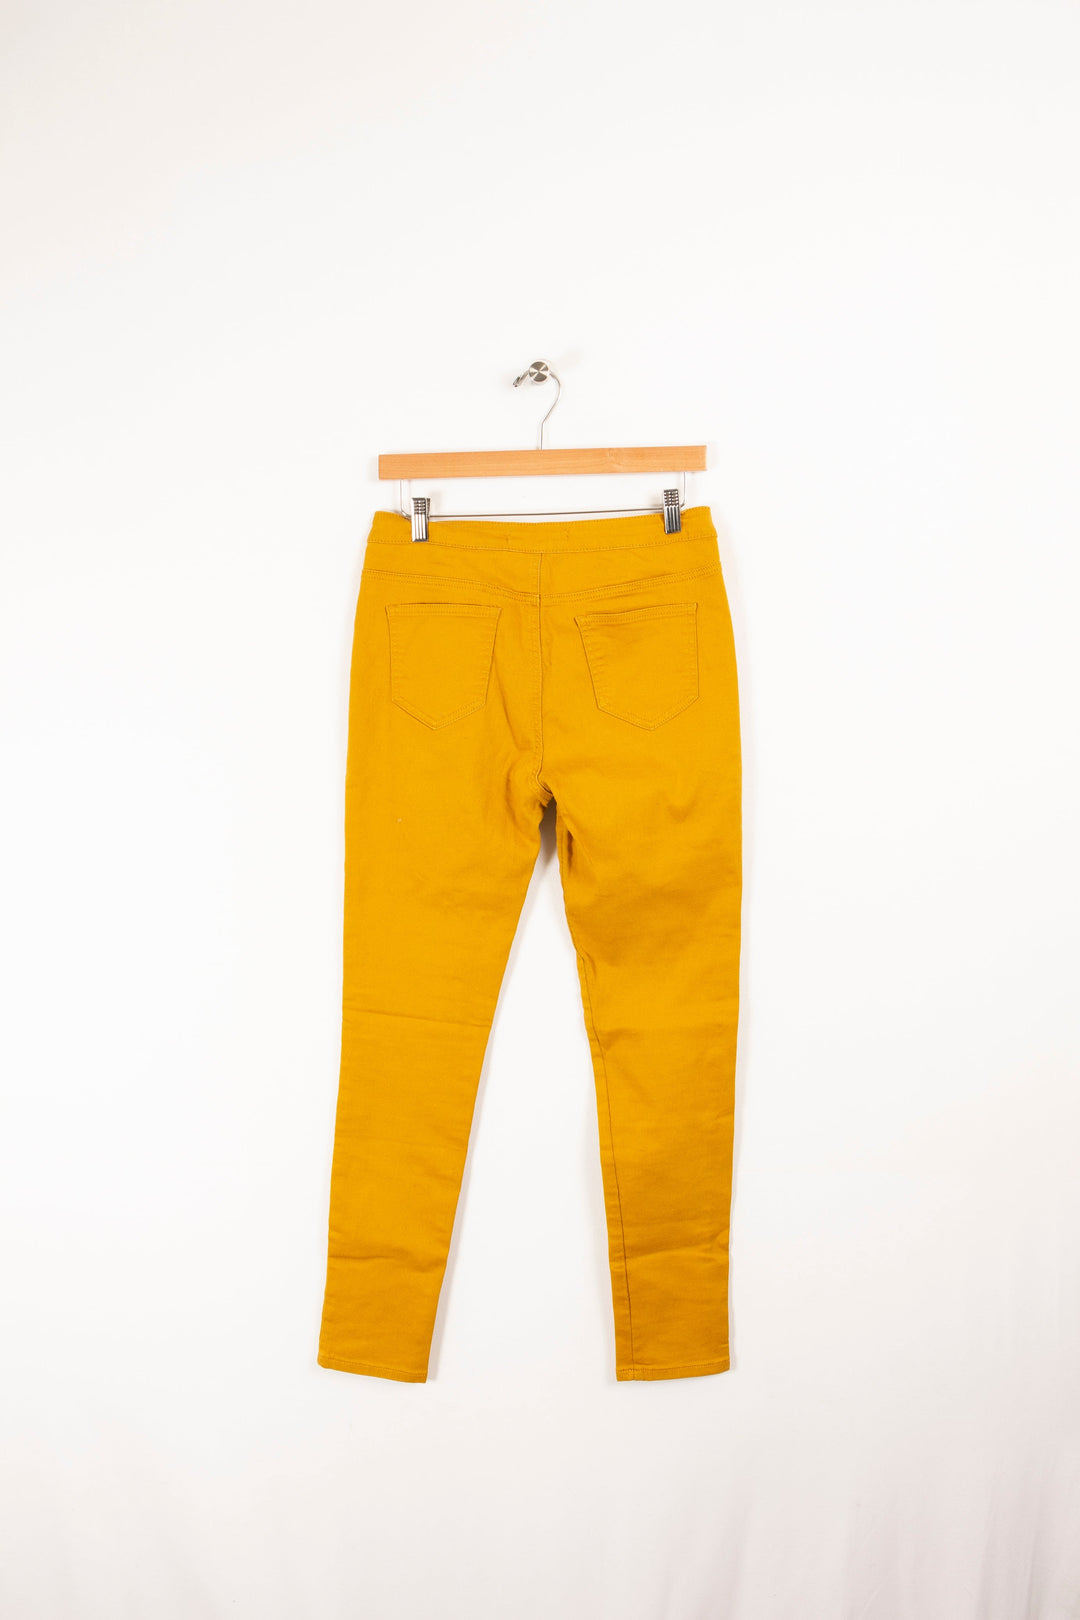 Gelbe Jeanshose – Größe L/40